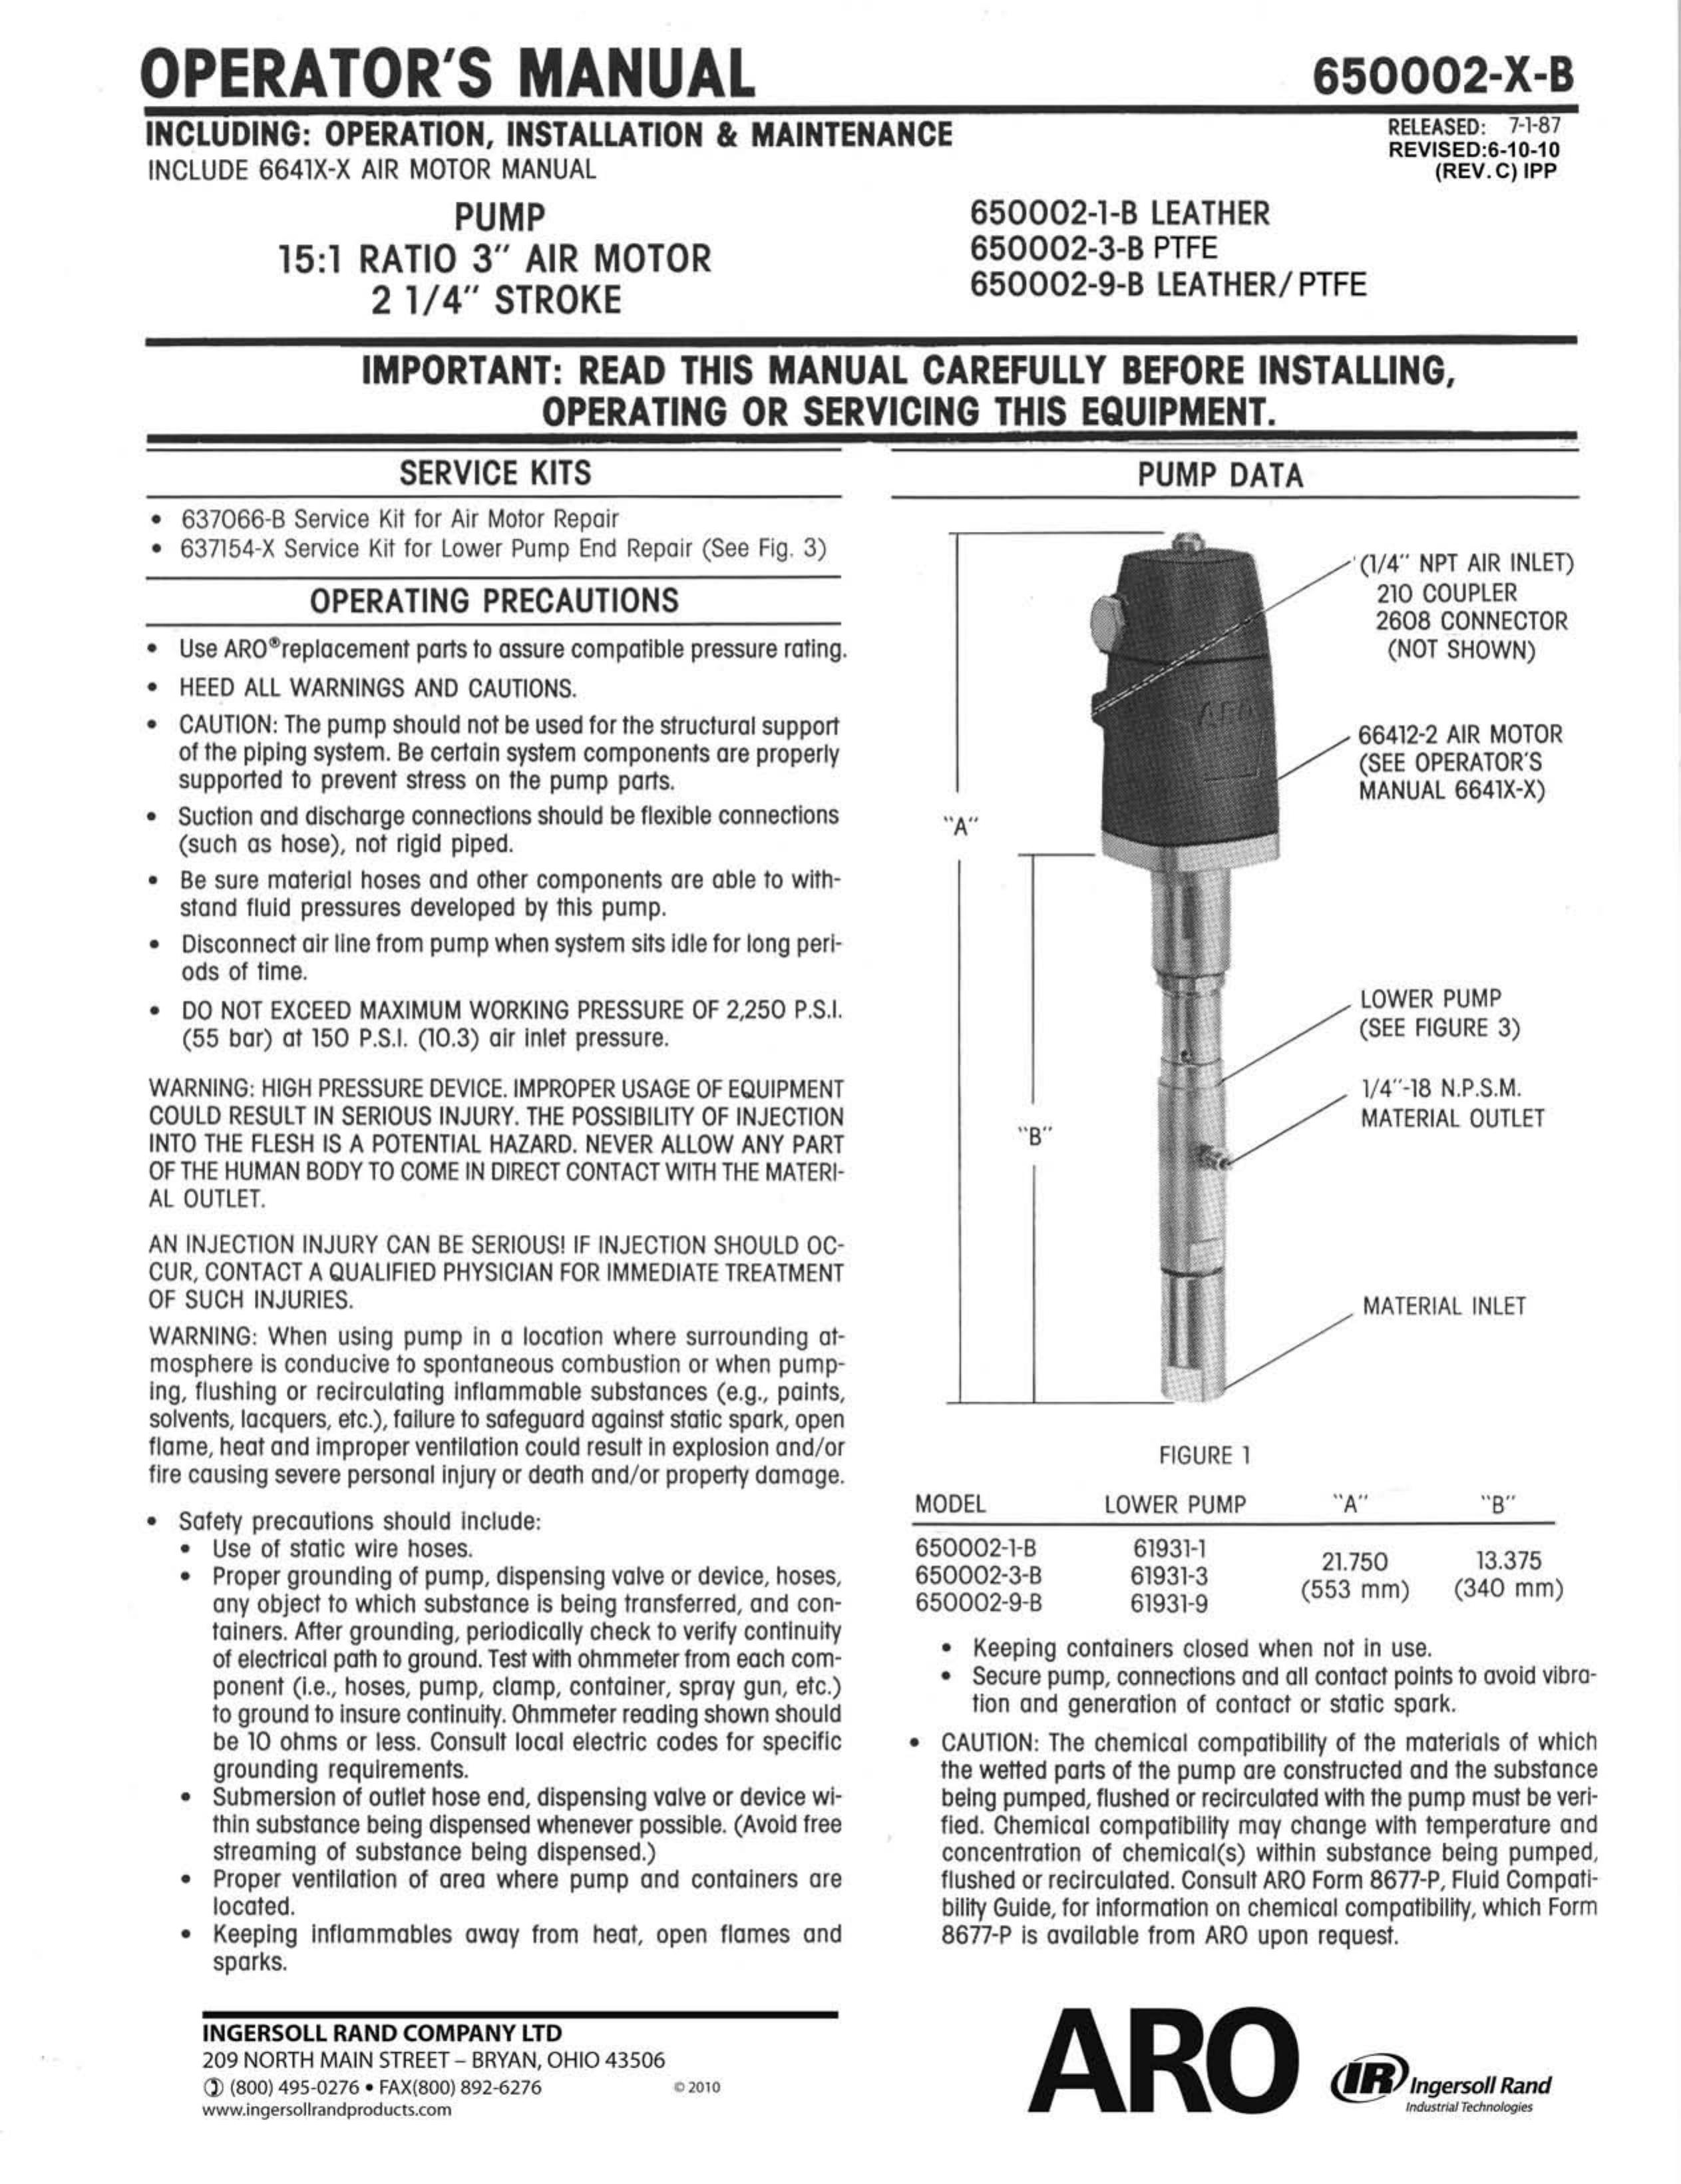 Ingersoll-Rand 650002-3-B Marine Sanitation System User Manual